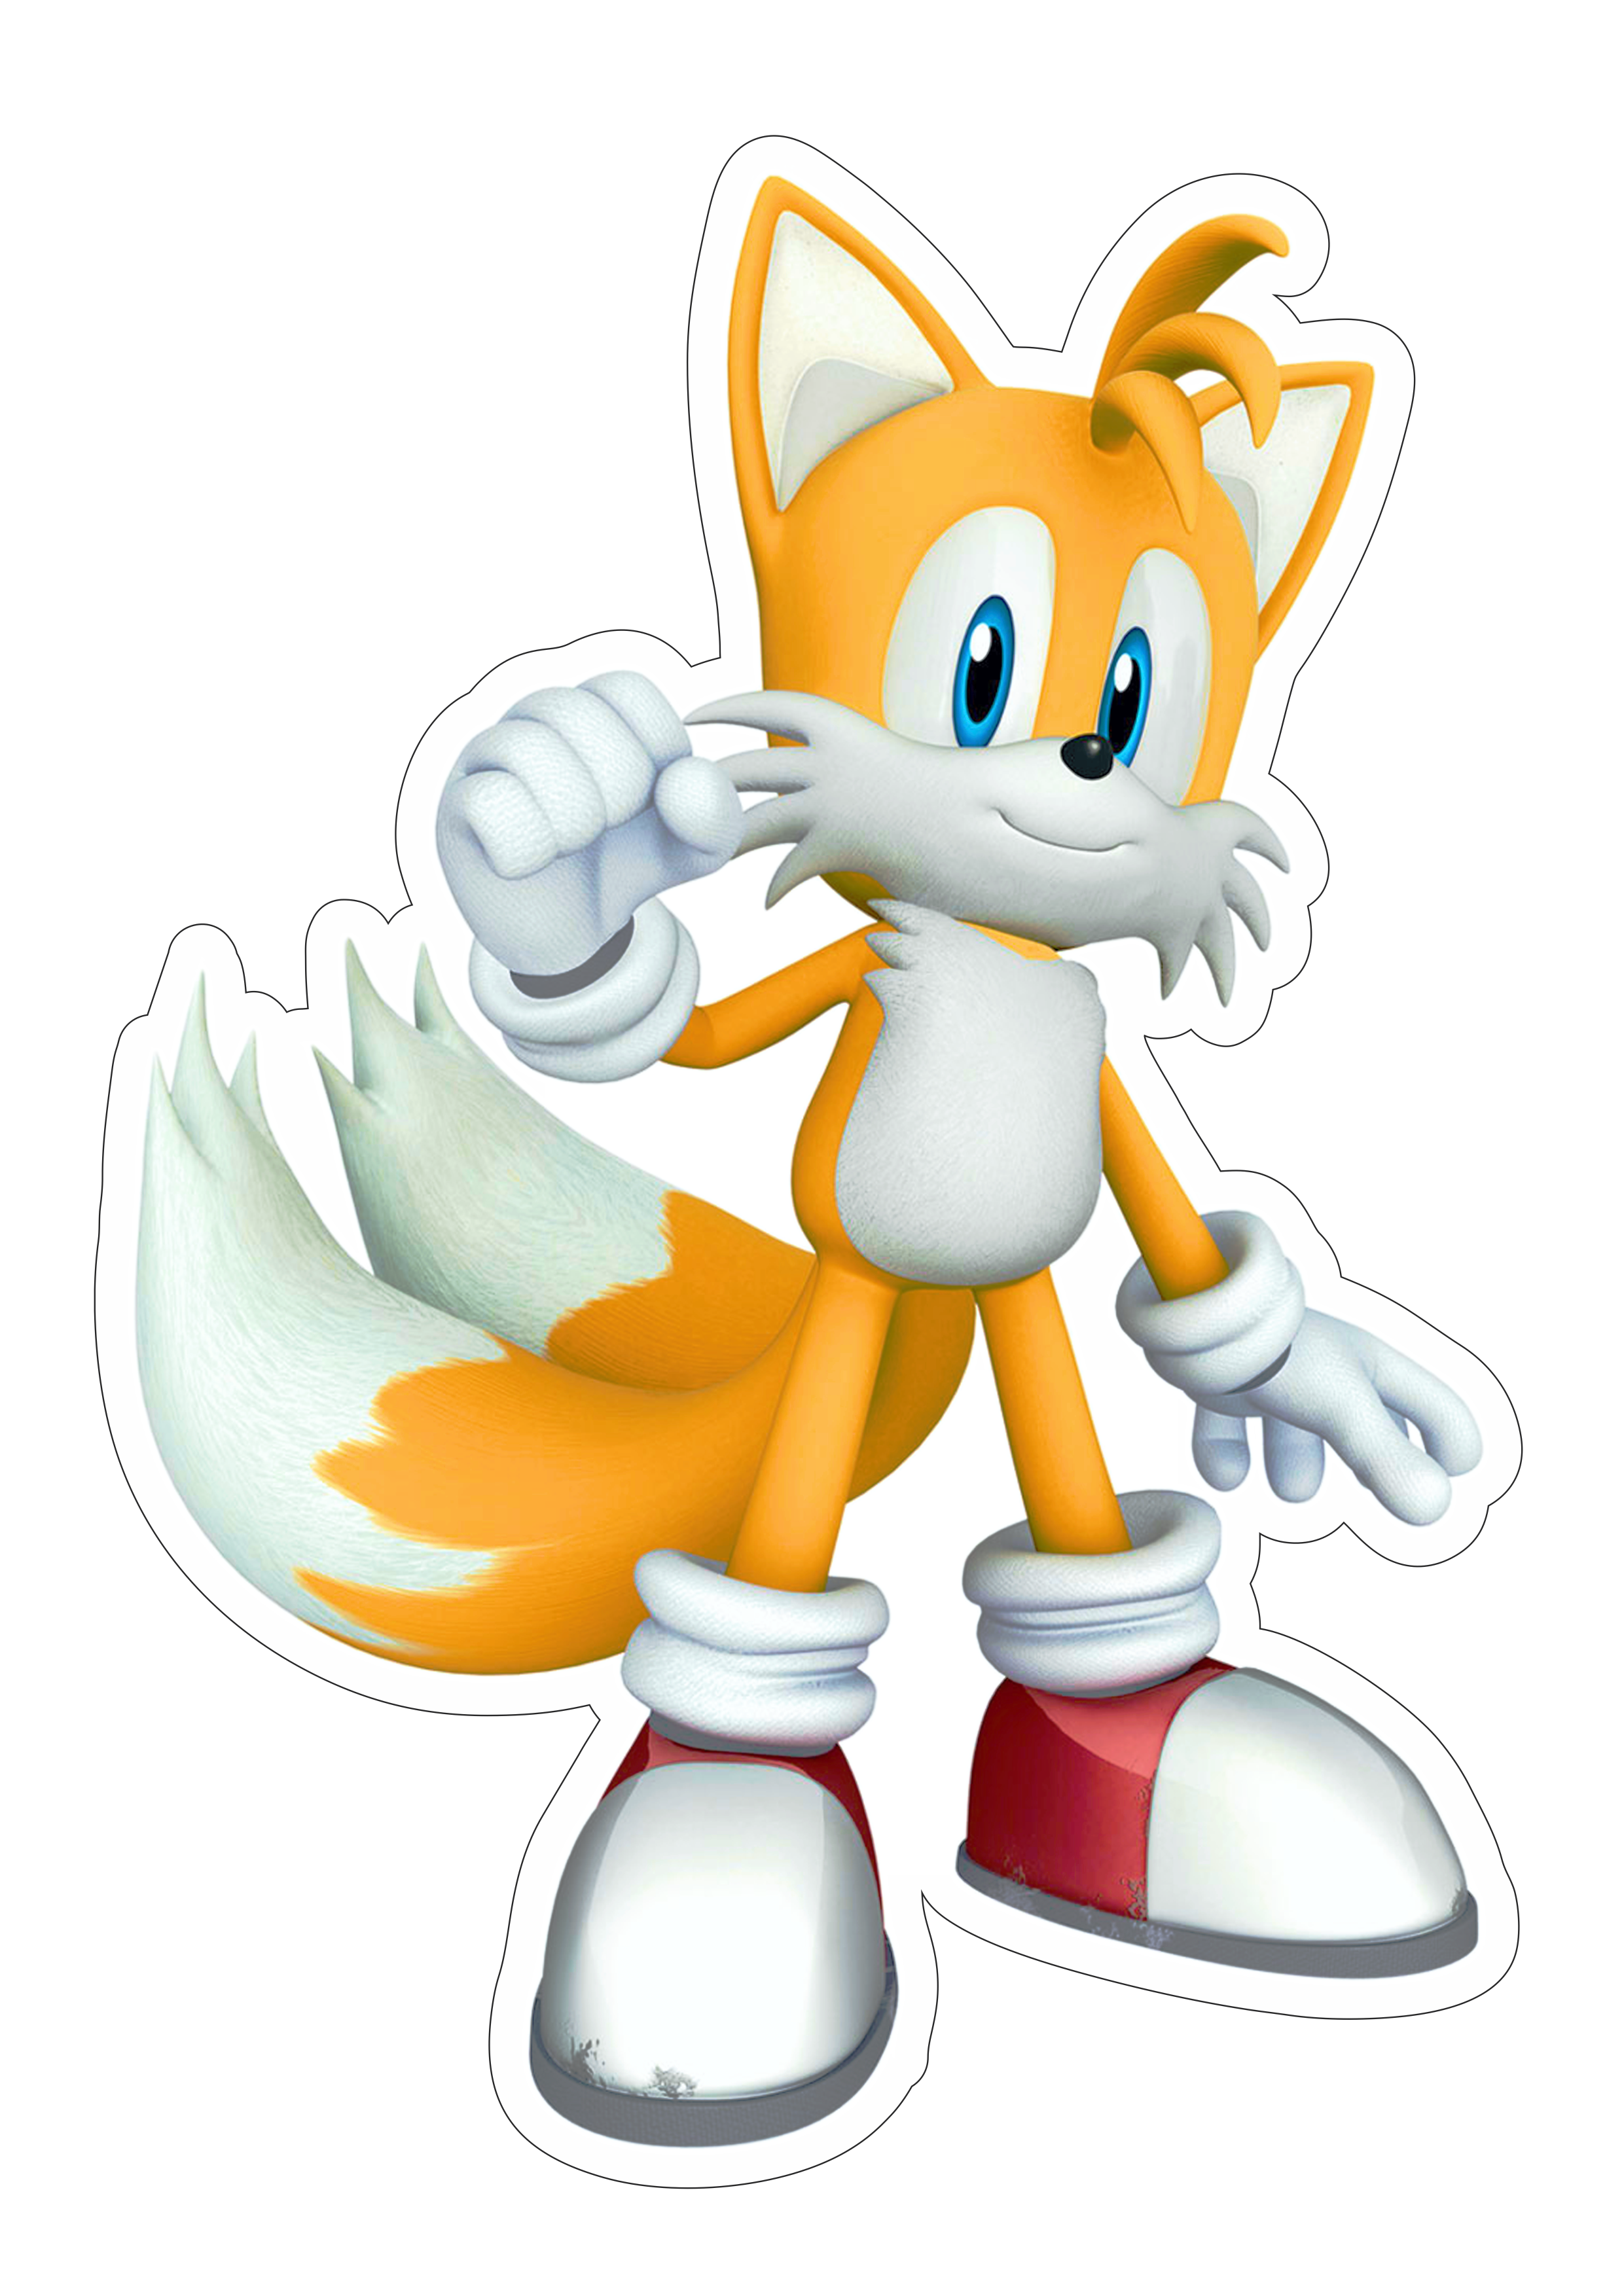 Tails Sonic the hedgehog personagem de game png